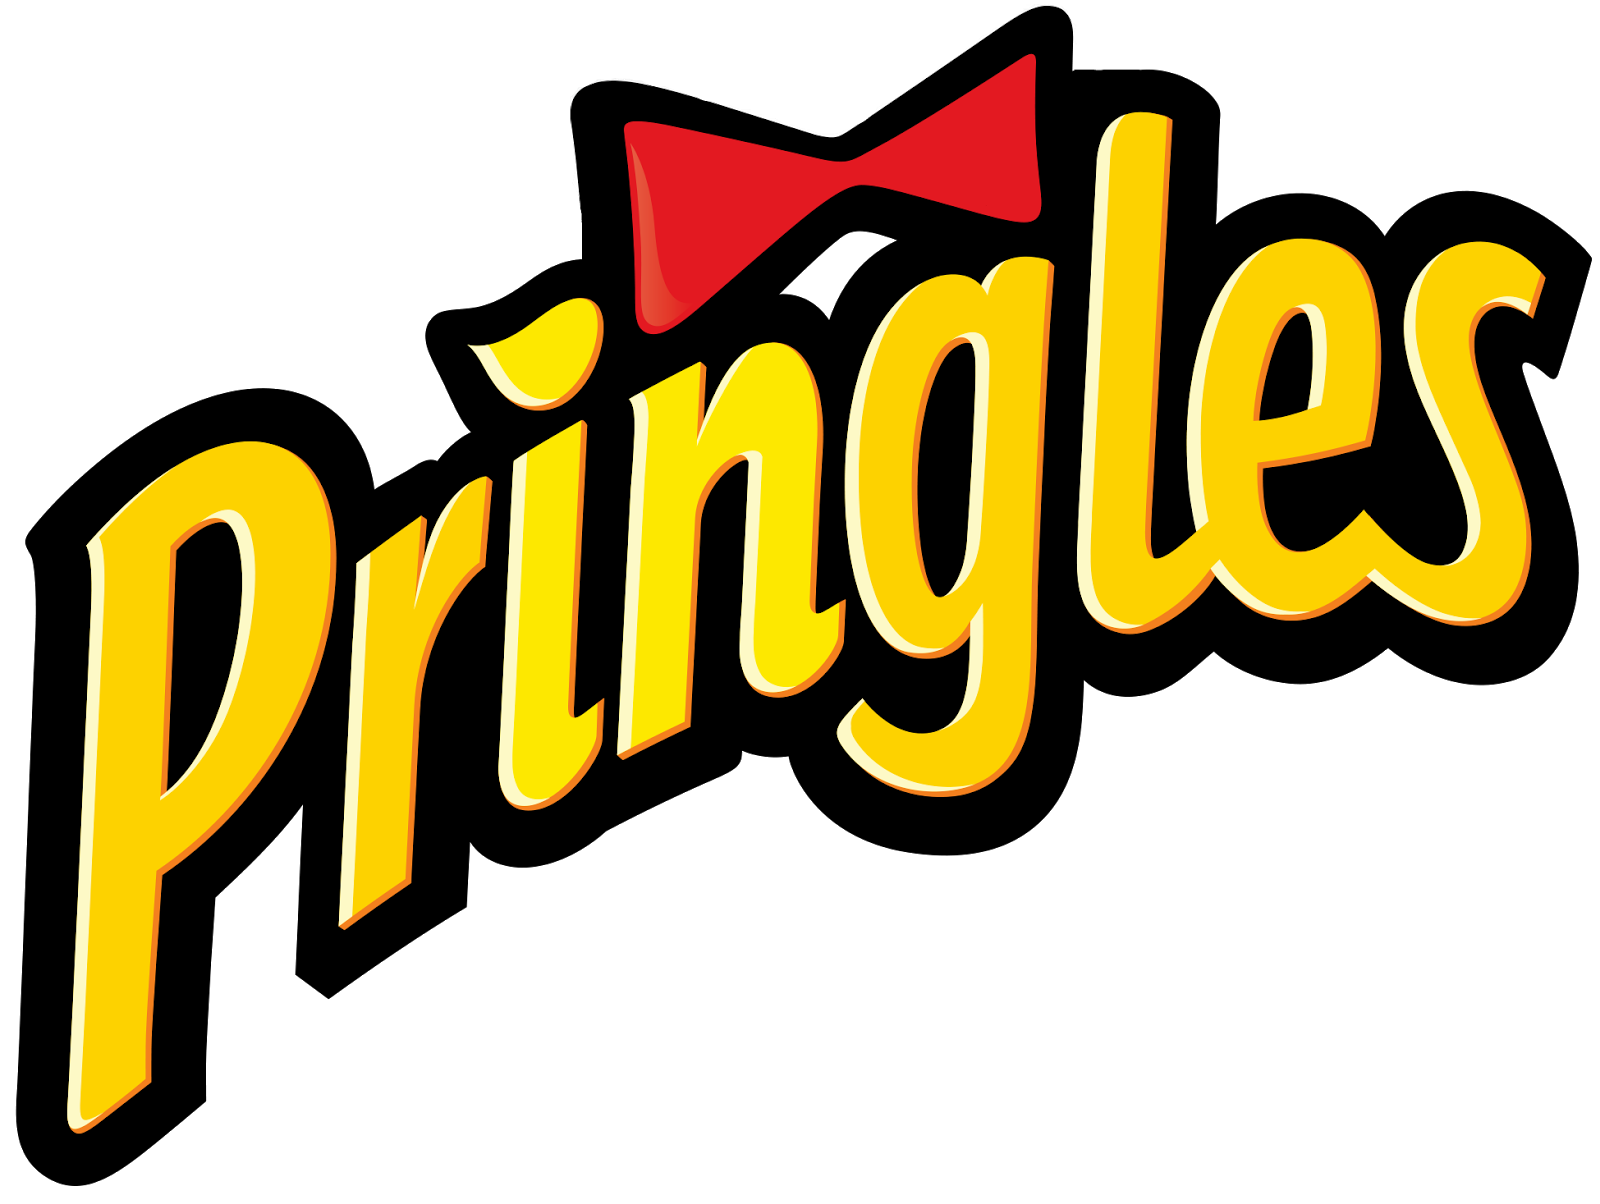 Pringles Logo Png Clipart Full Size Clipart 1858994 P - vrogue.co